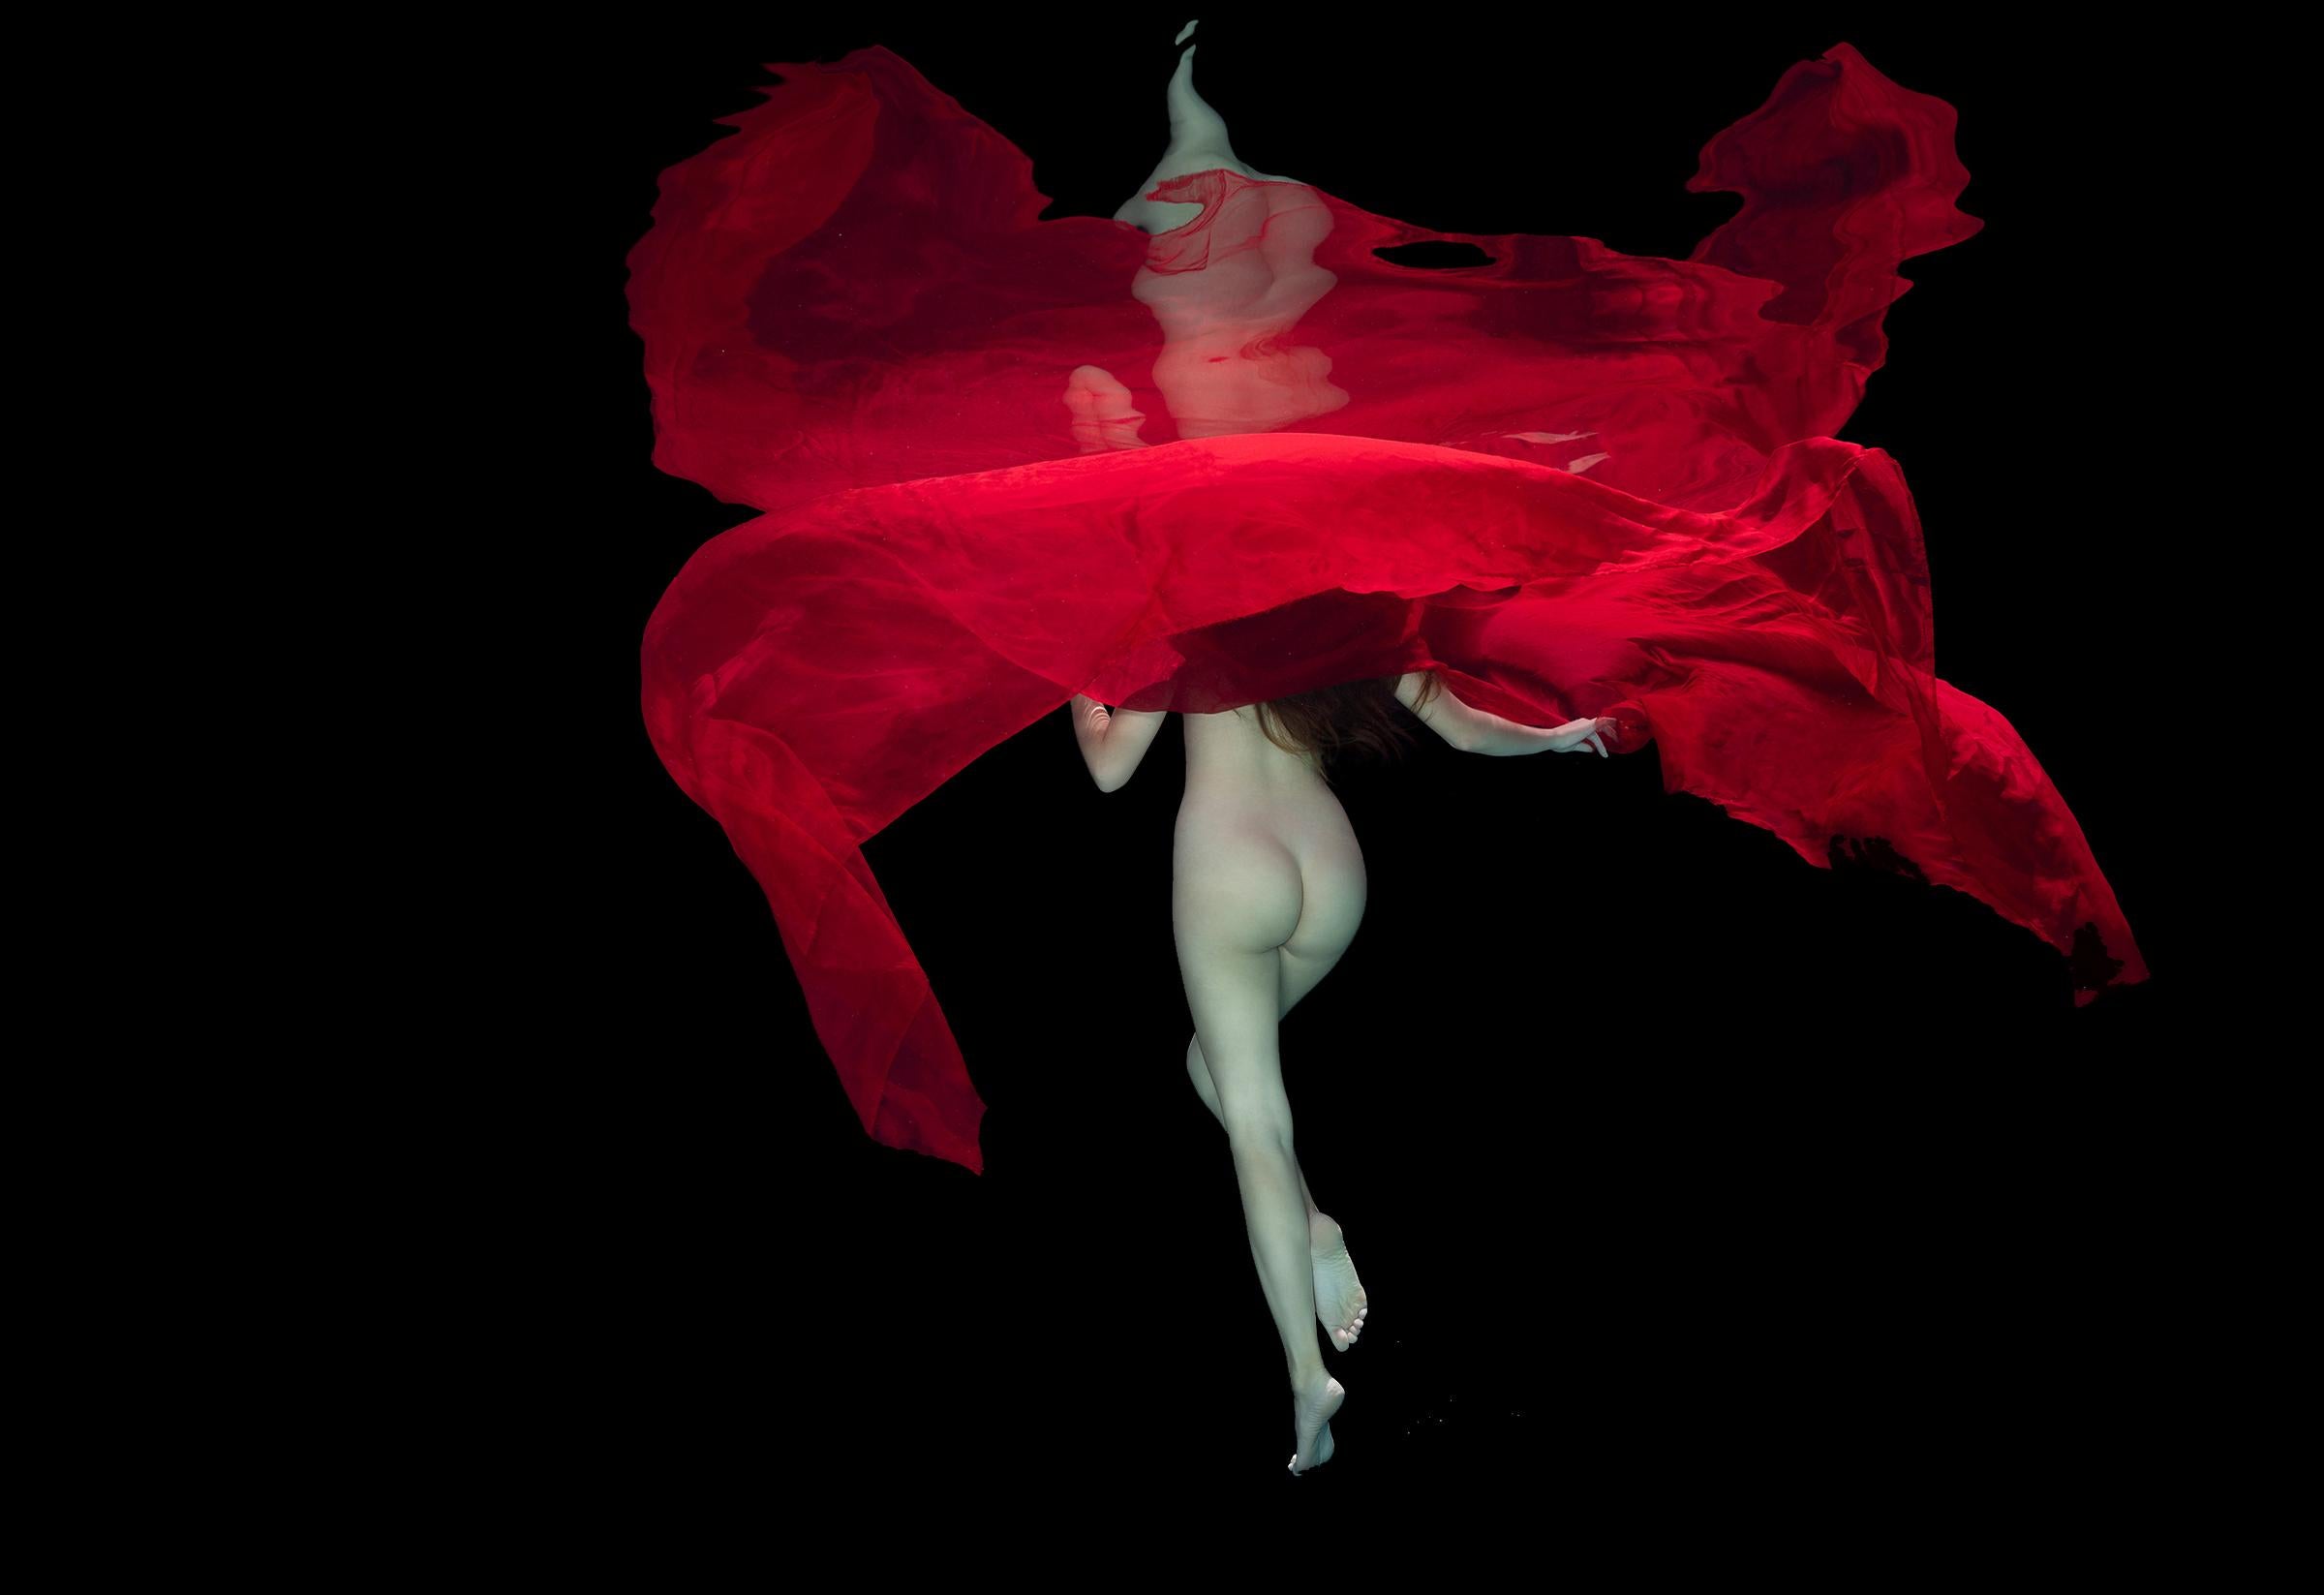 Alex Sher Figurative Photograph - Hibiscus - underwater nude photograph - archival pigment print 35х53